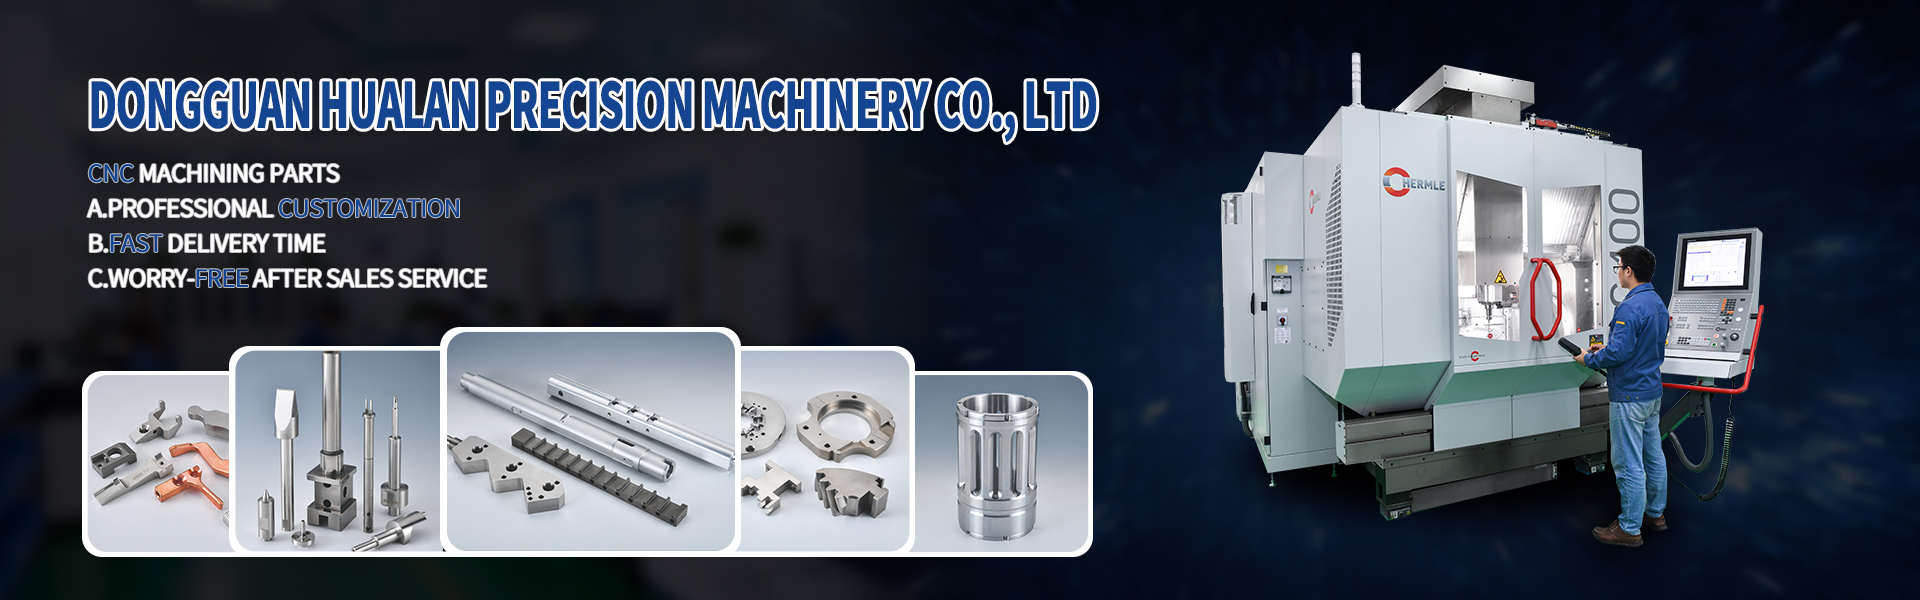 CNC-Bearbeitungsteile, Turieren und Fräsen, Leitungsschneiden,Dongguan Hualan Precision Machinery Co., LTD